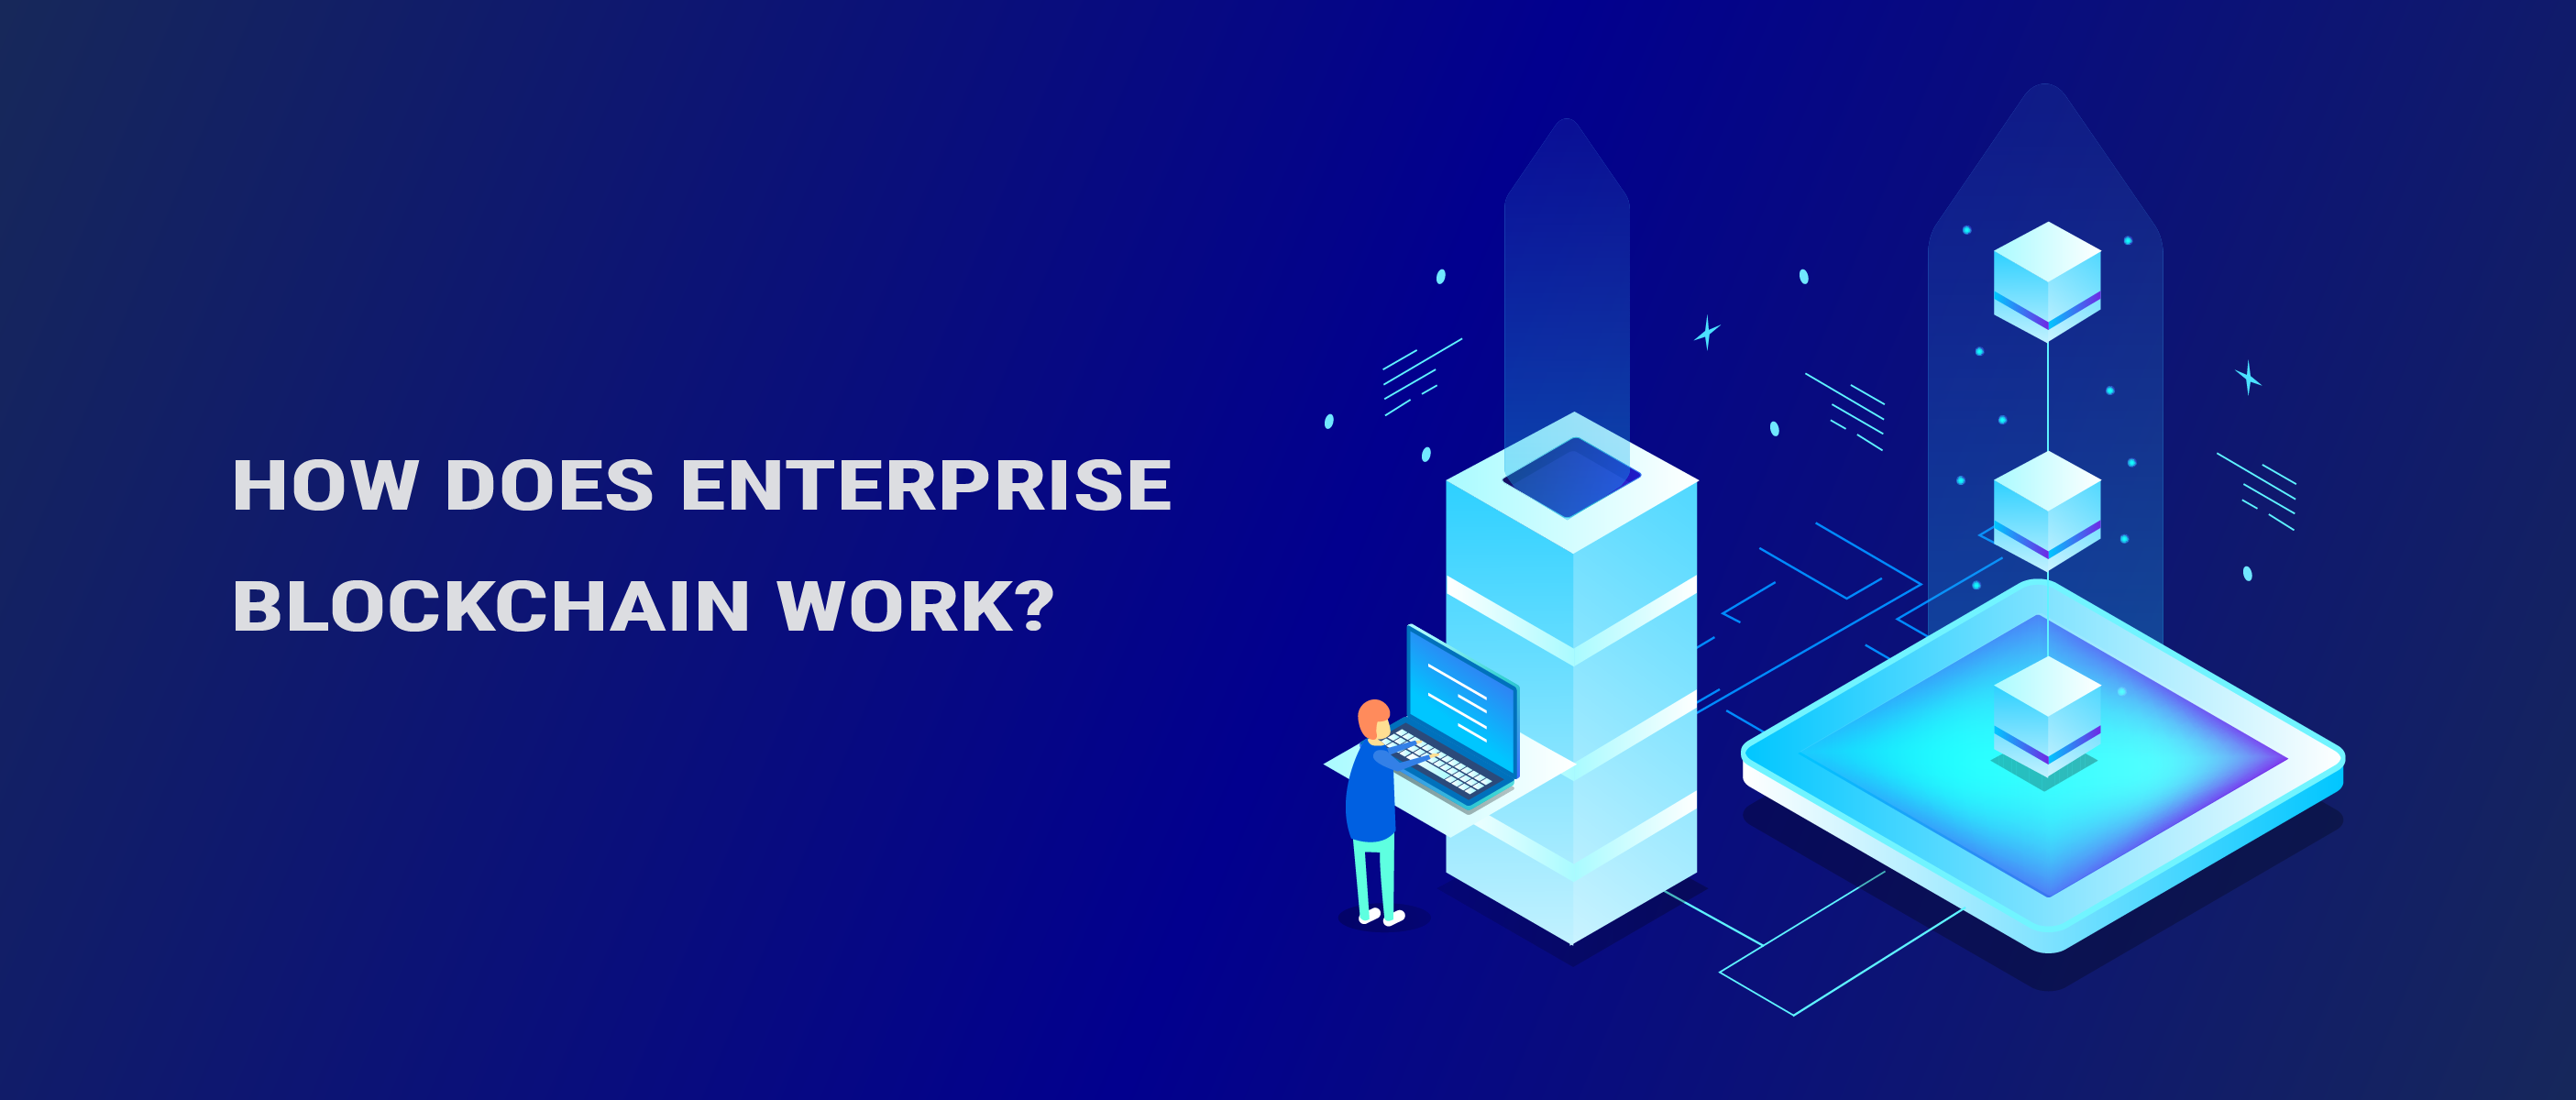 How Does Enterprise Blockchain Work?